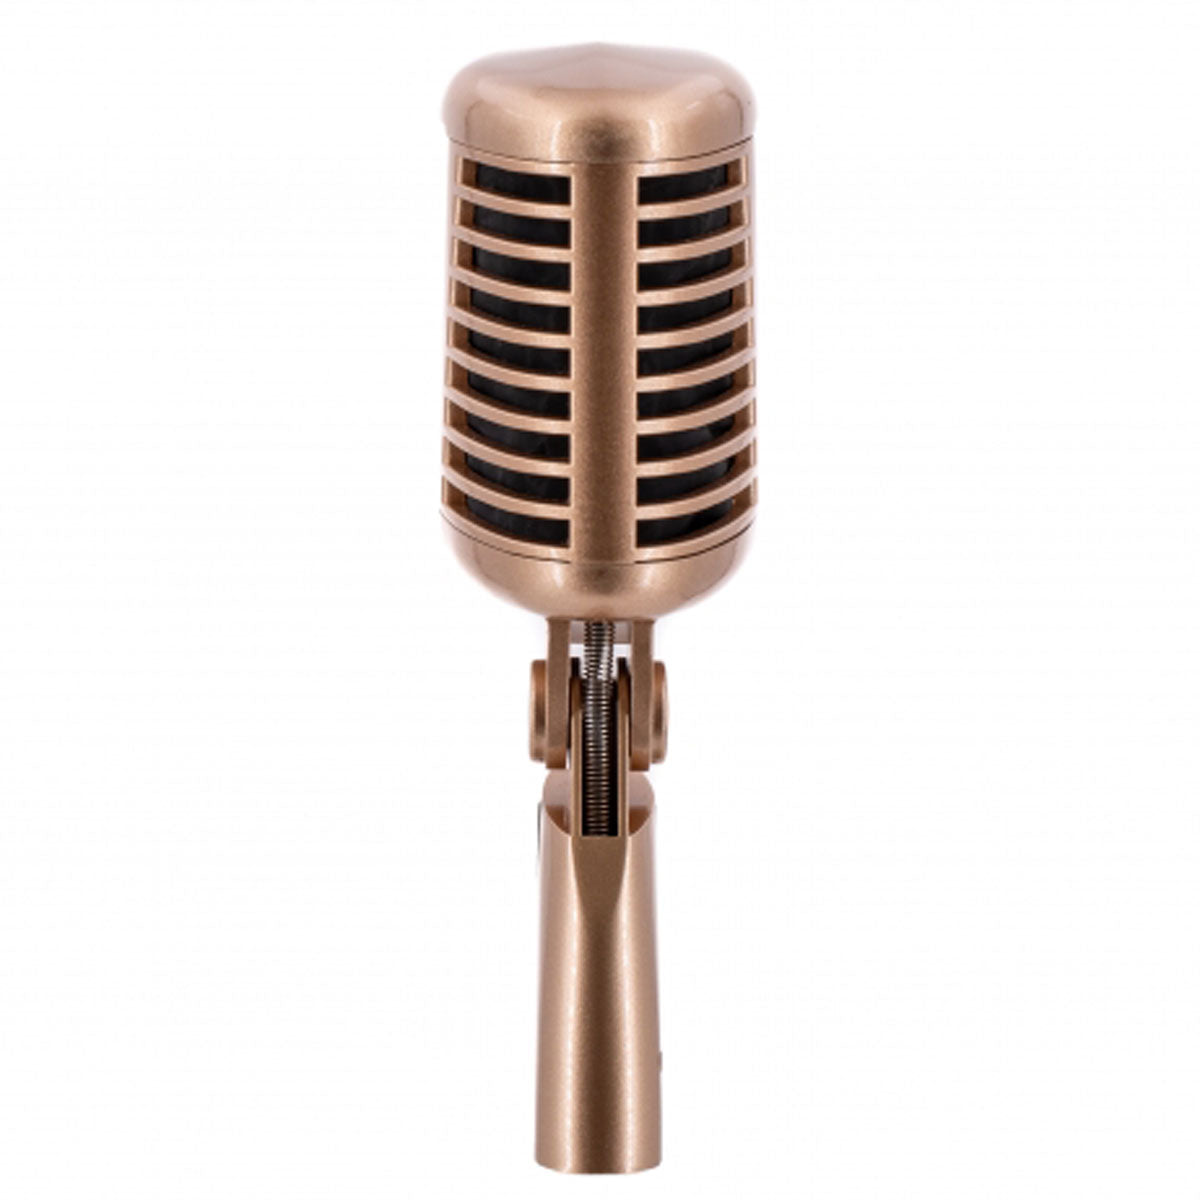 CAD Audio A77 Supercardioid Large Diaphragm Dynamic Microphone